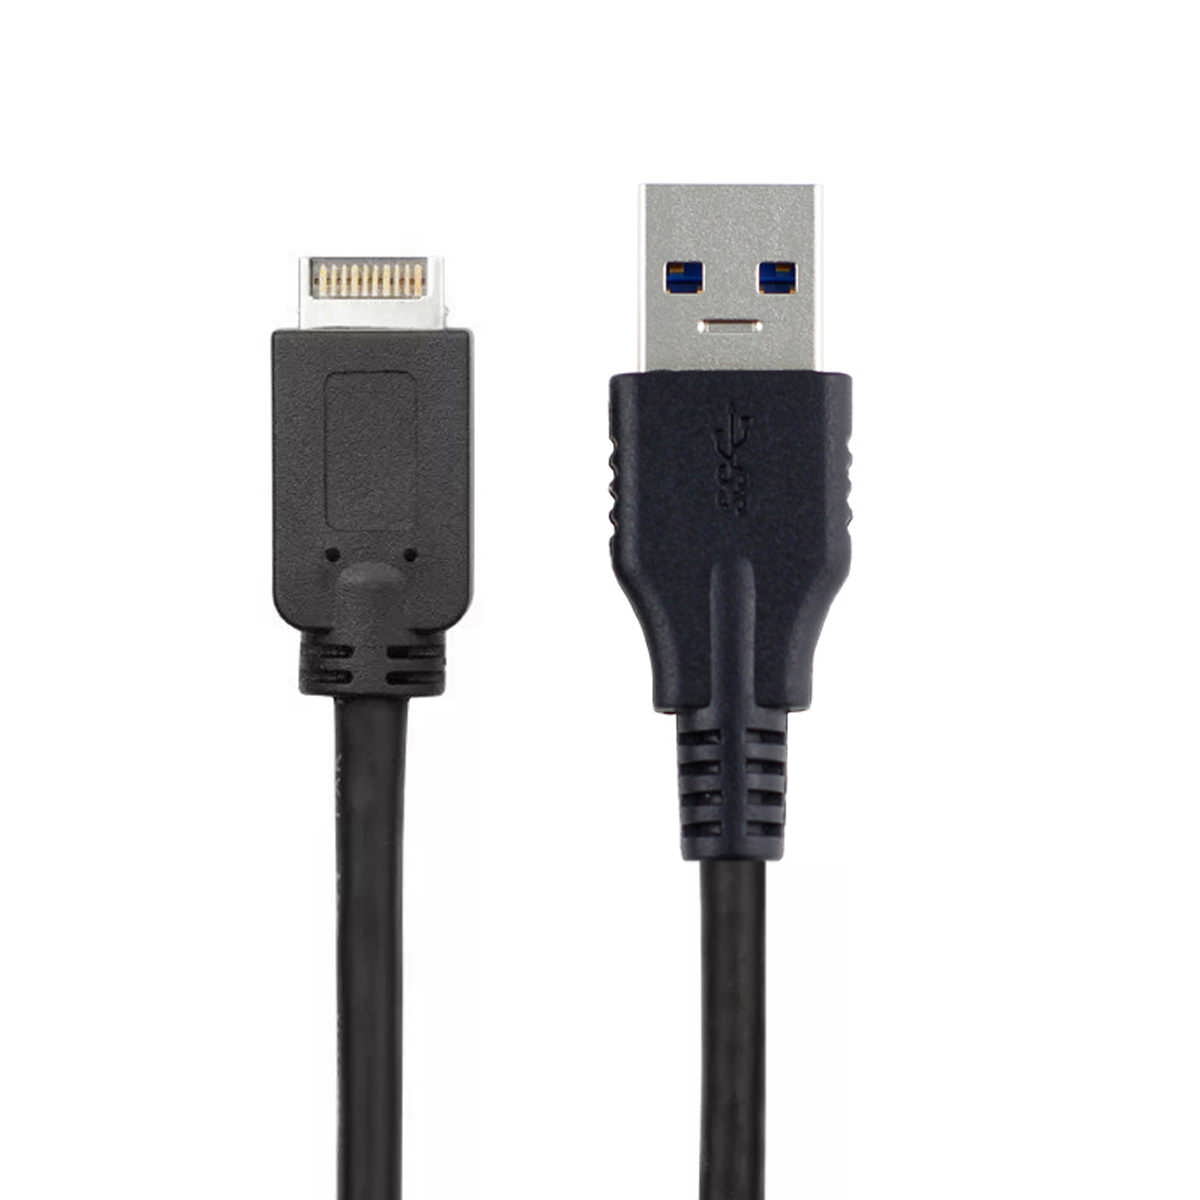 USB32-AE-50 | USB 3.2 Type-E에서 Type-A로 어댑터 케이블